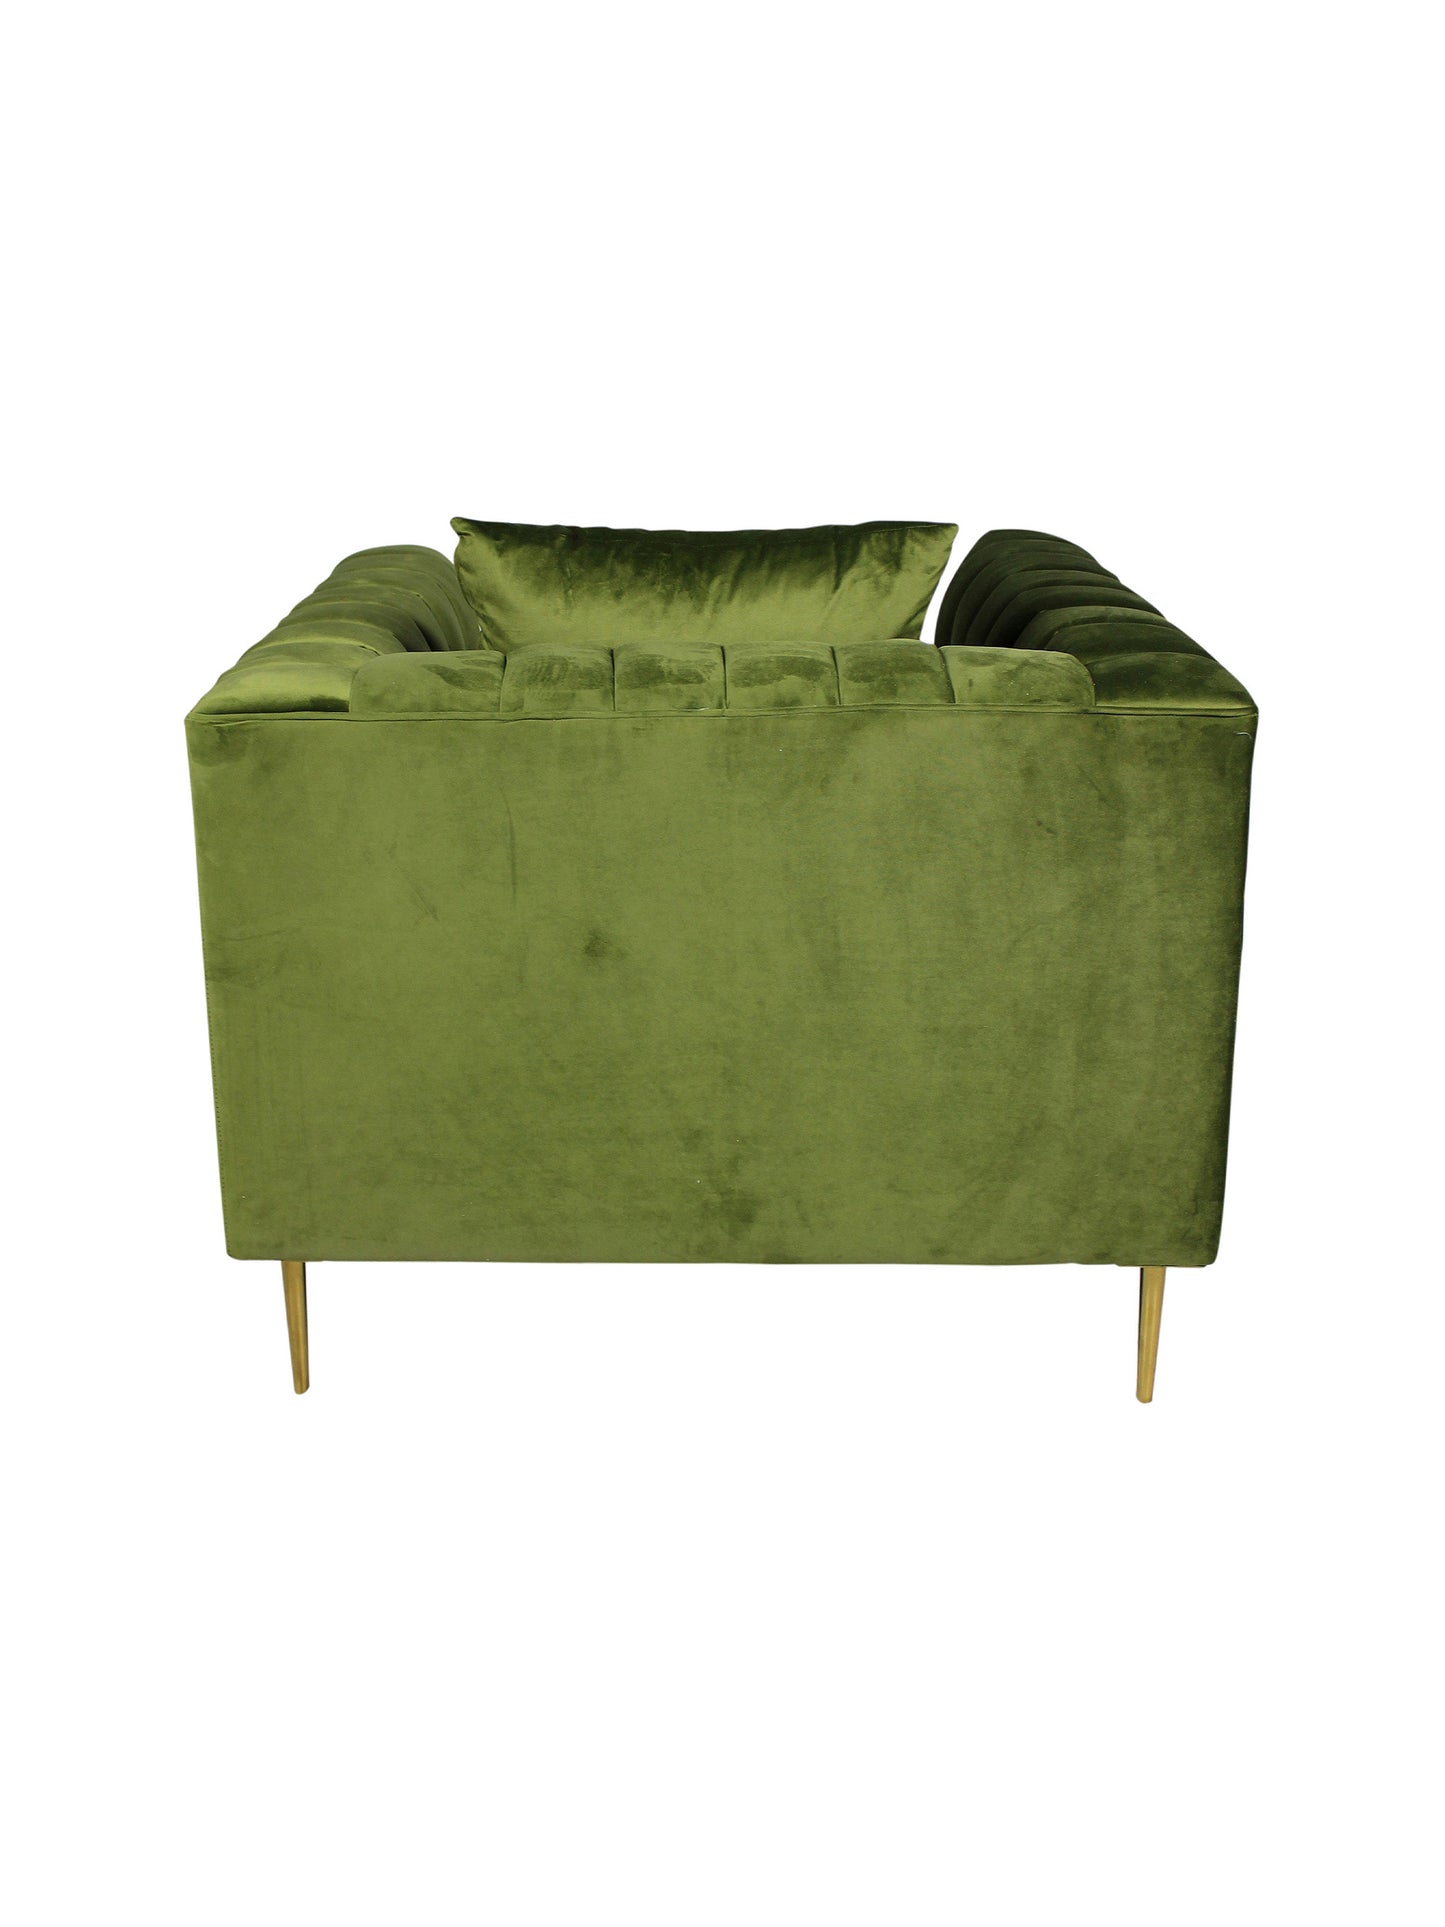 Eclectic Home Rutland Olive Sofa Chair